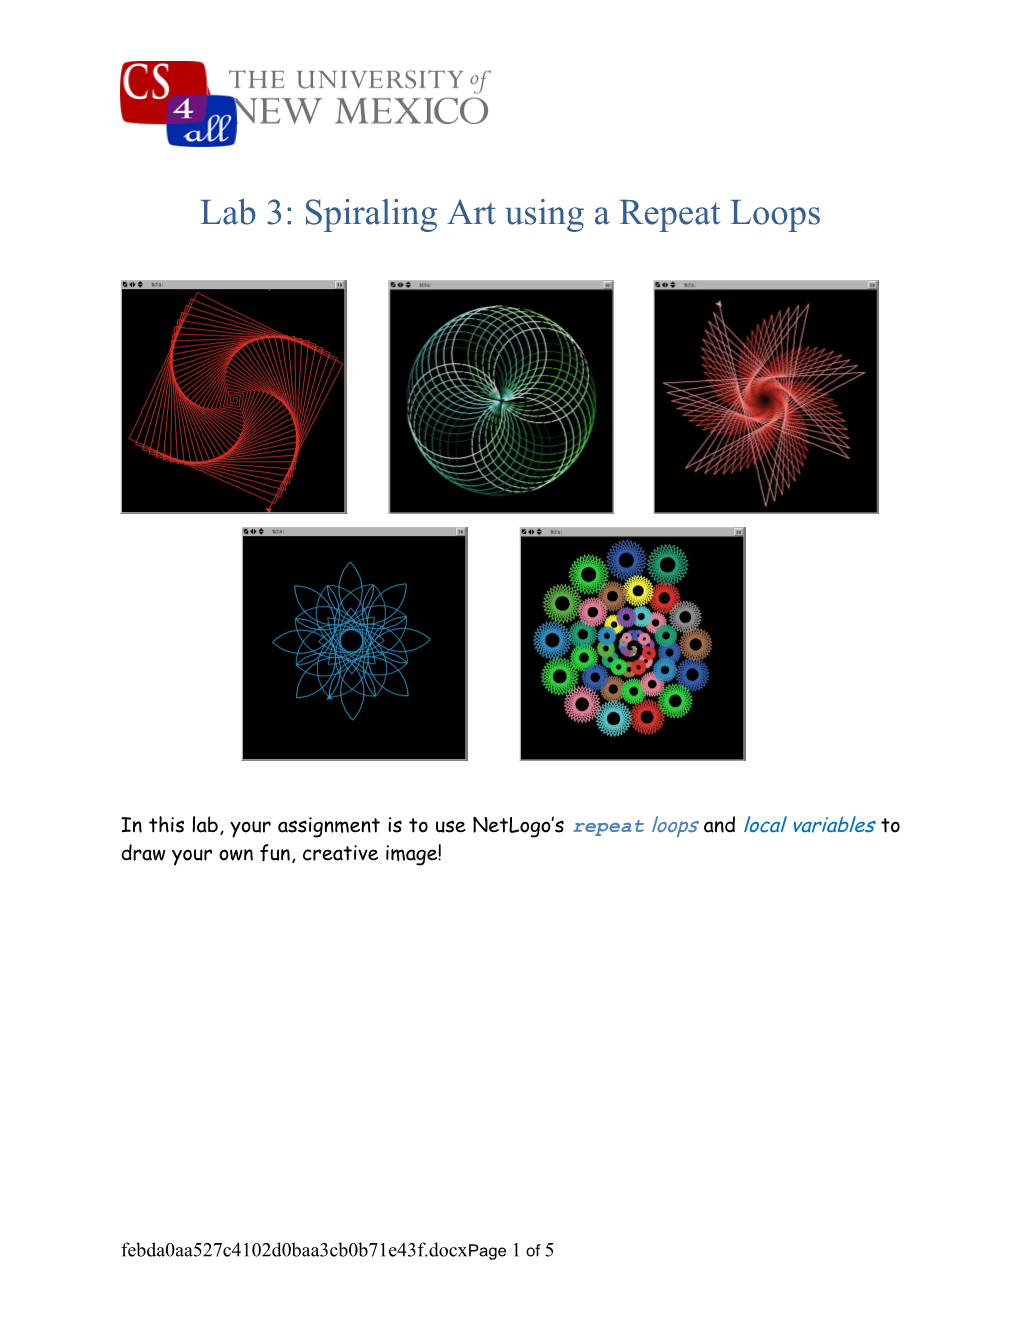 Lab 3: Spiraling Art Using a Repeat Loops